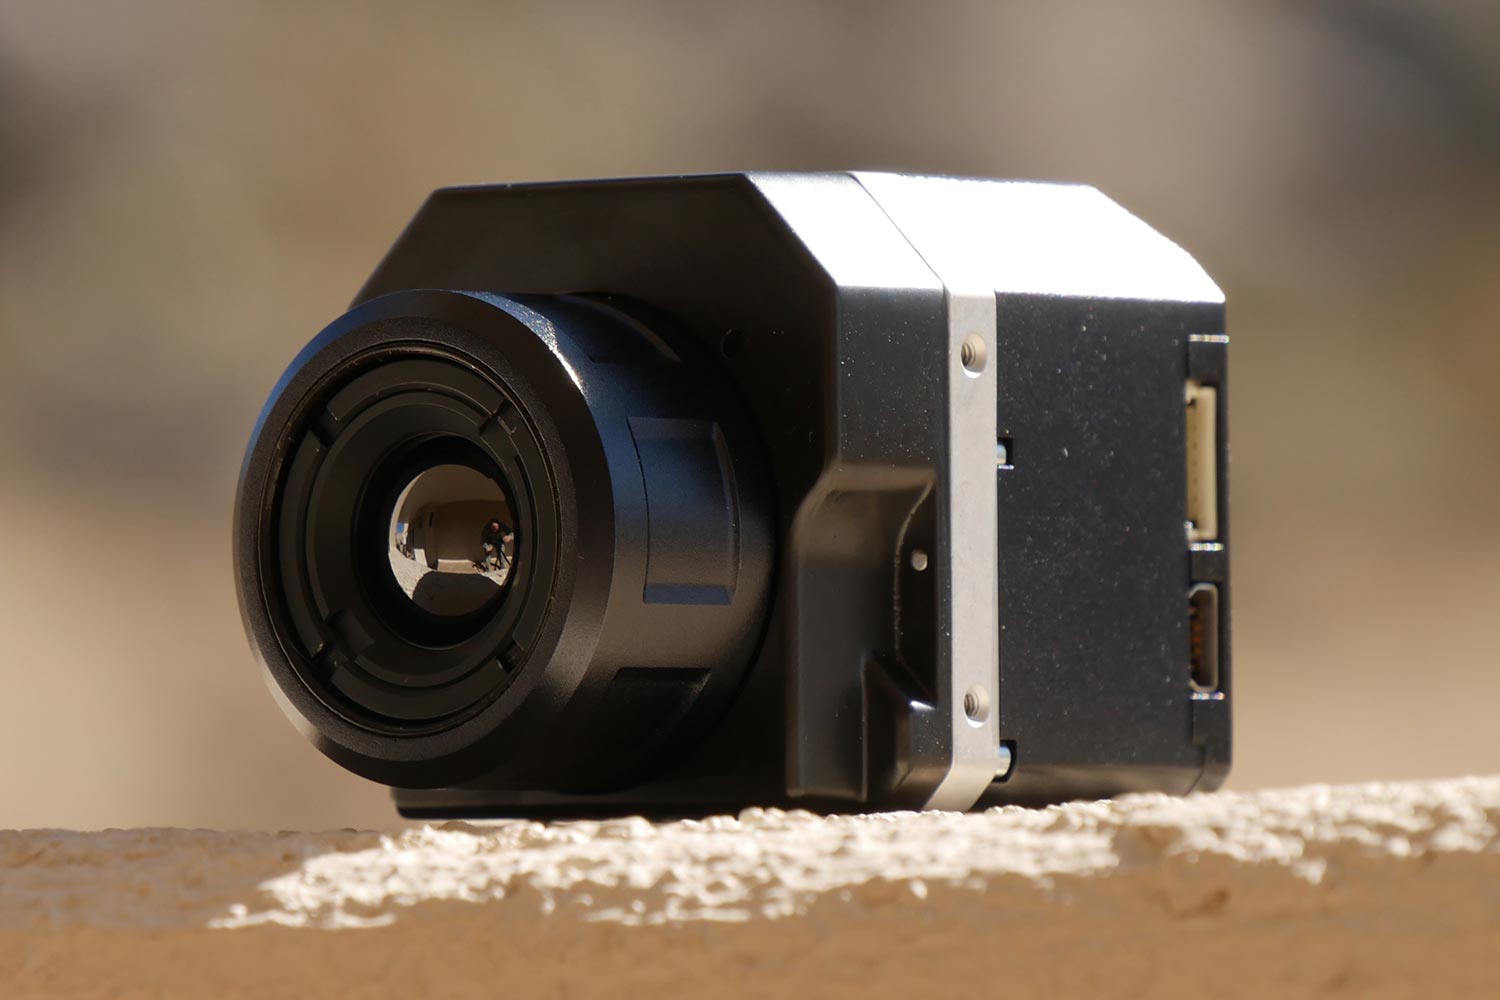 flir vue pro thermal camera for drones 9mm ntsc 30hz 2002